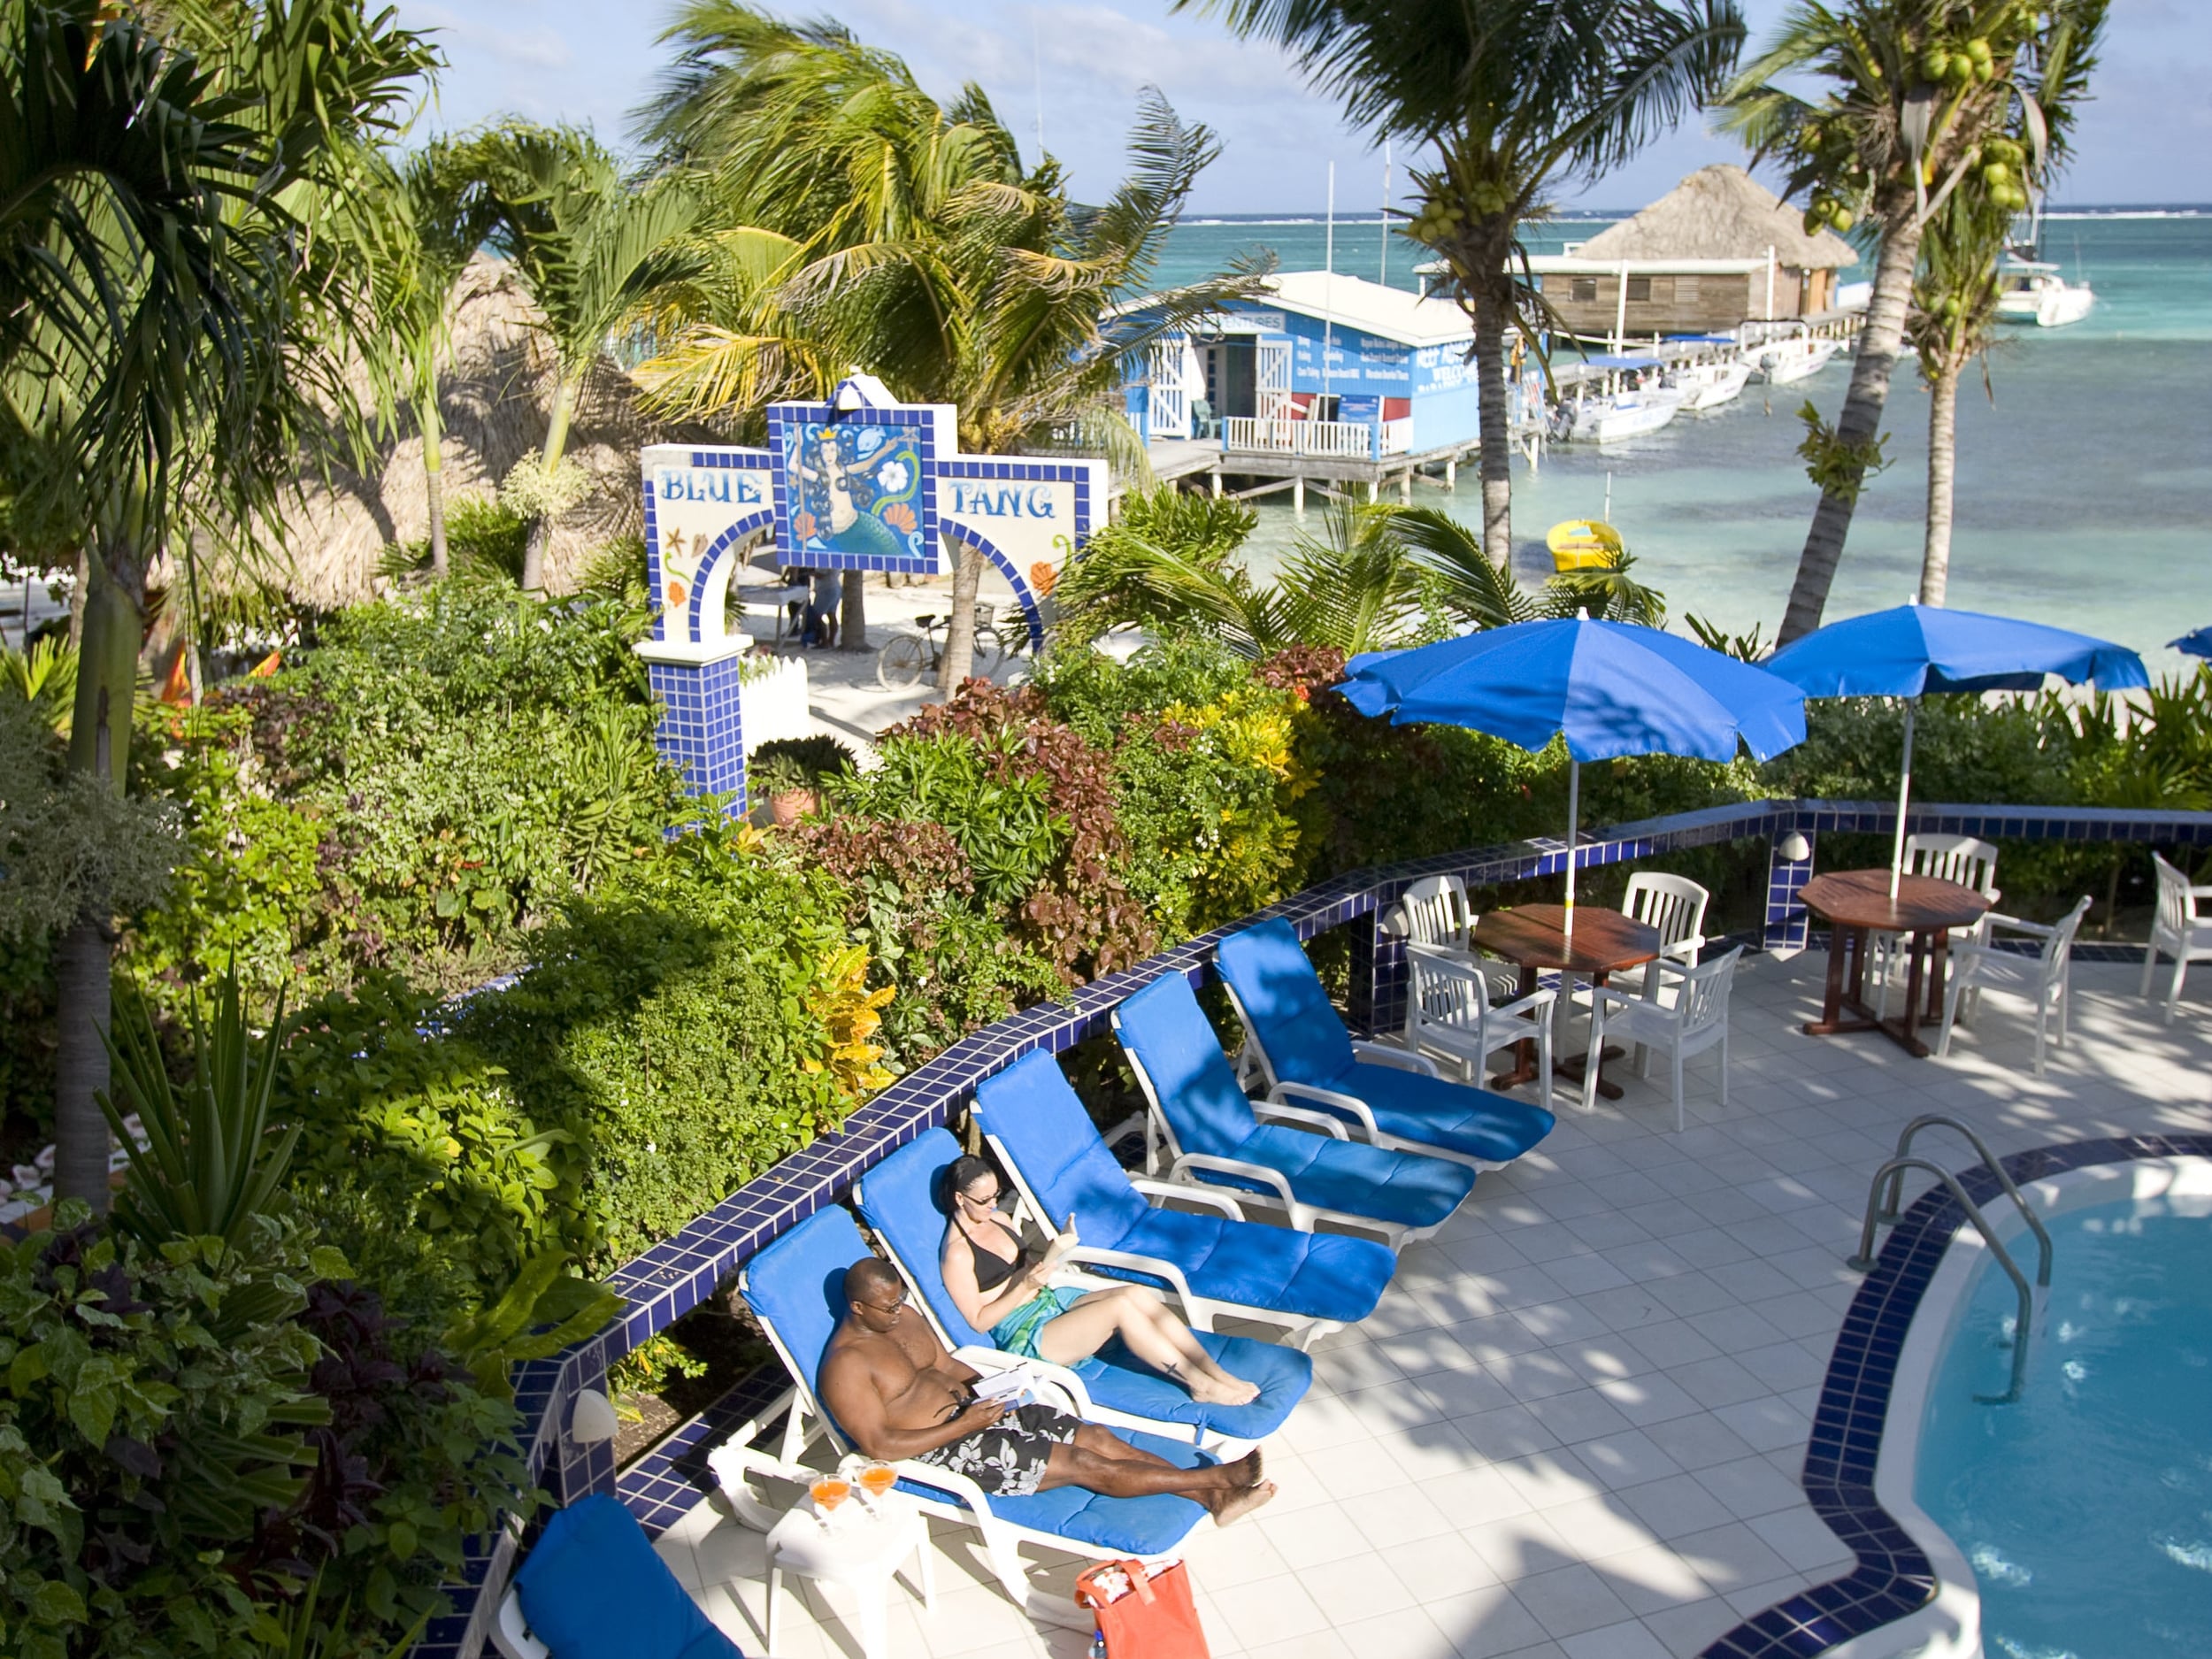 Blue Tang Inn, San Pedro, Ambergris Caye, Belize